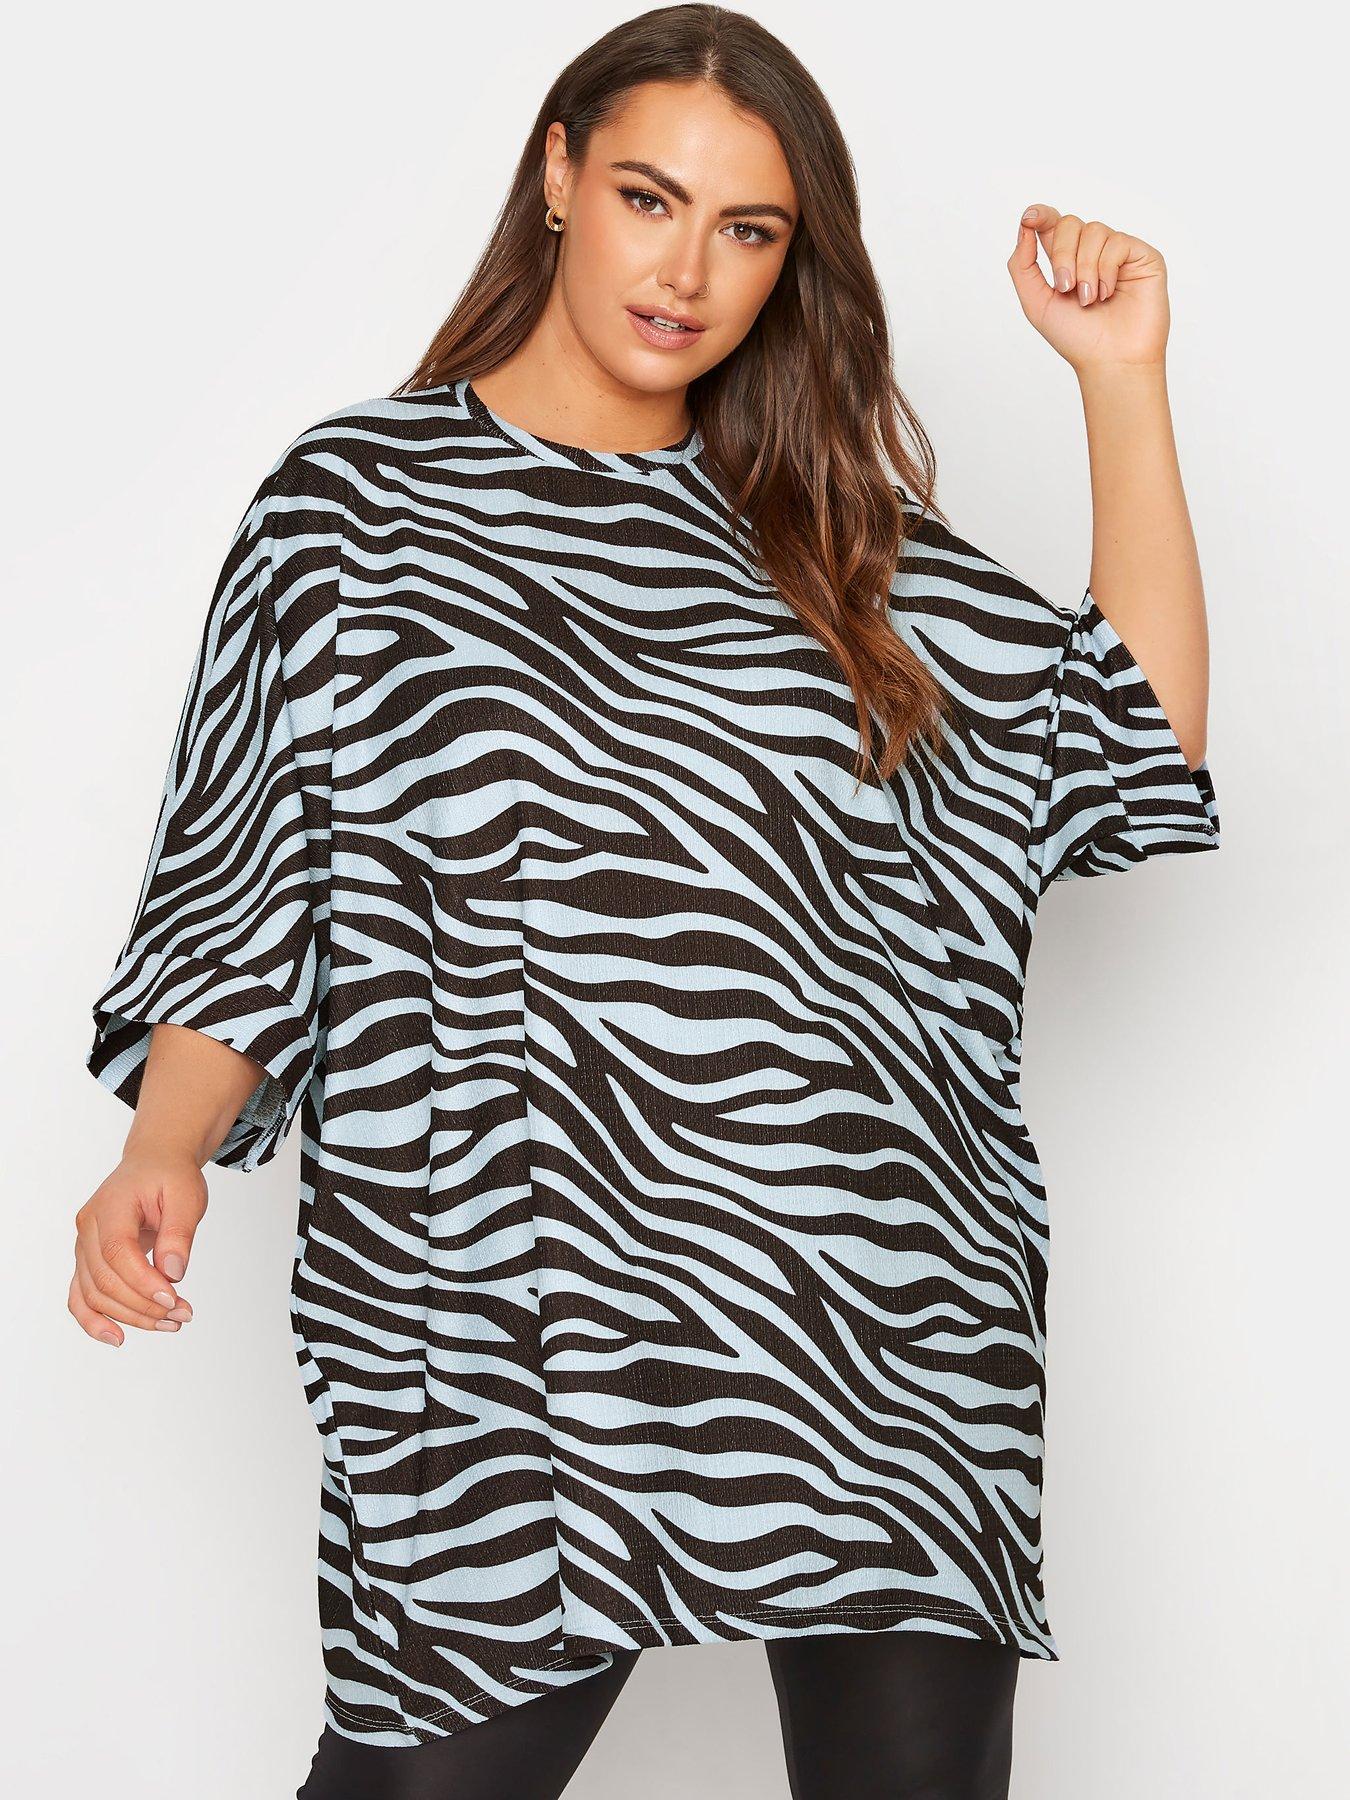 Tops & T-shirts Clothing Zebra Printed 3/4 Sleeve Top